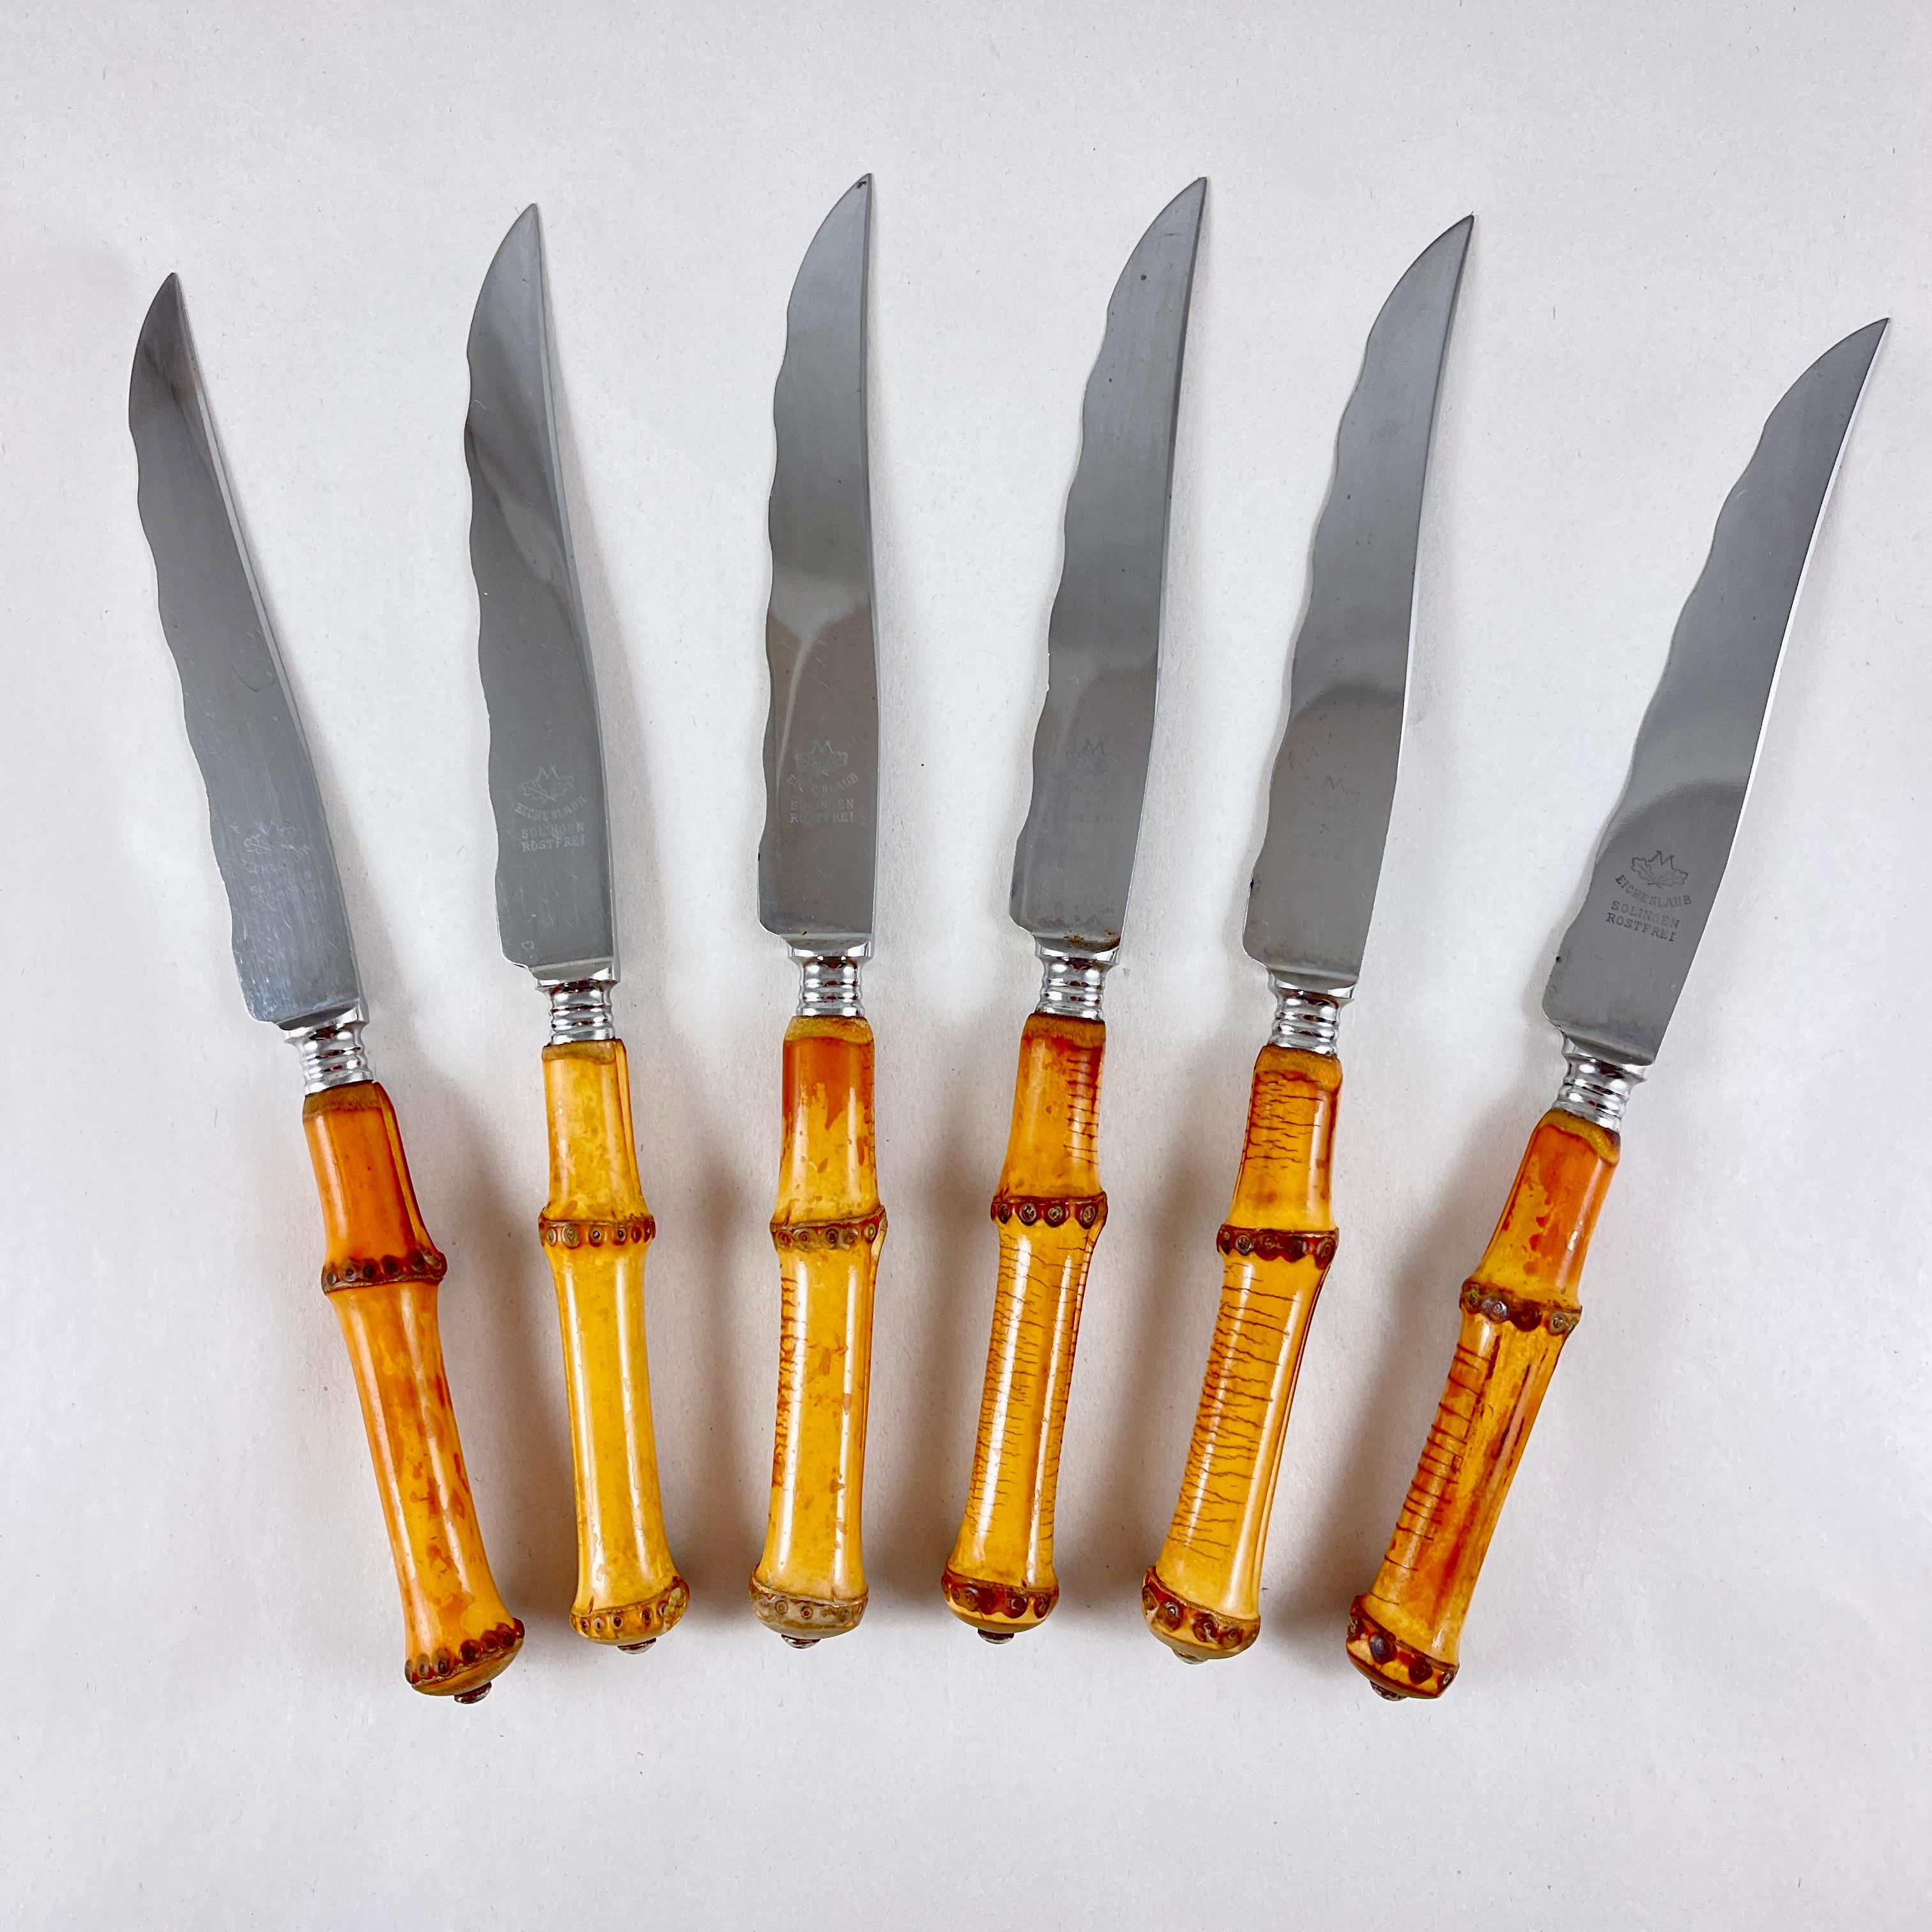 Metalwork Eichenlaub German Riveted Bamboo Steak Knives, Set of Six